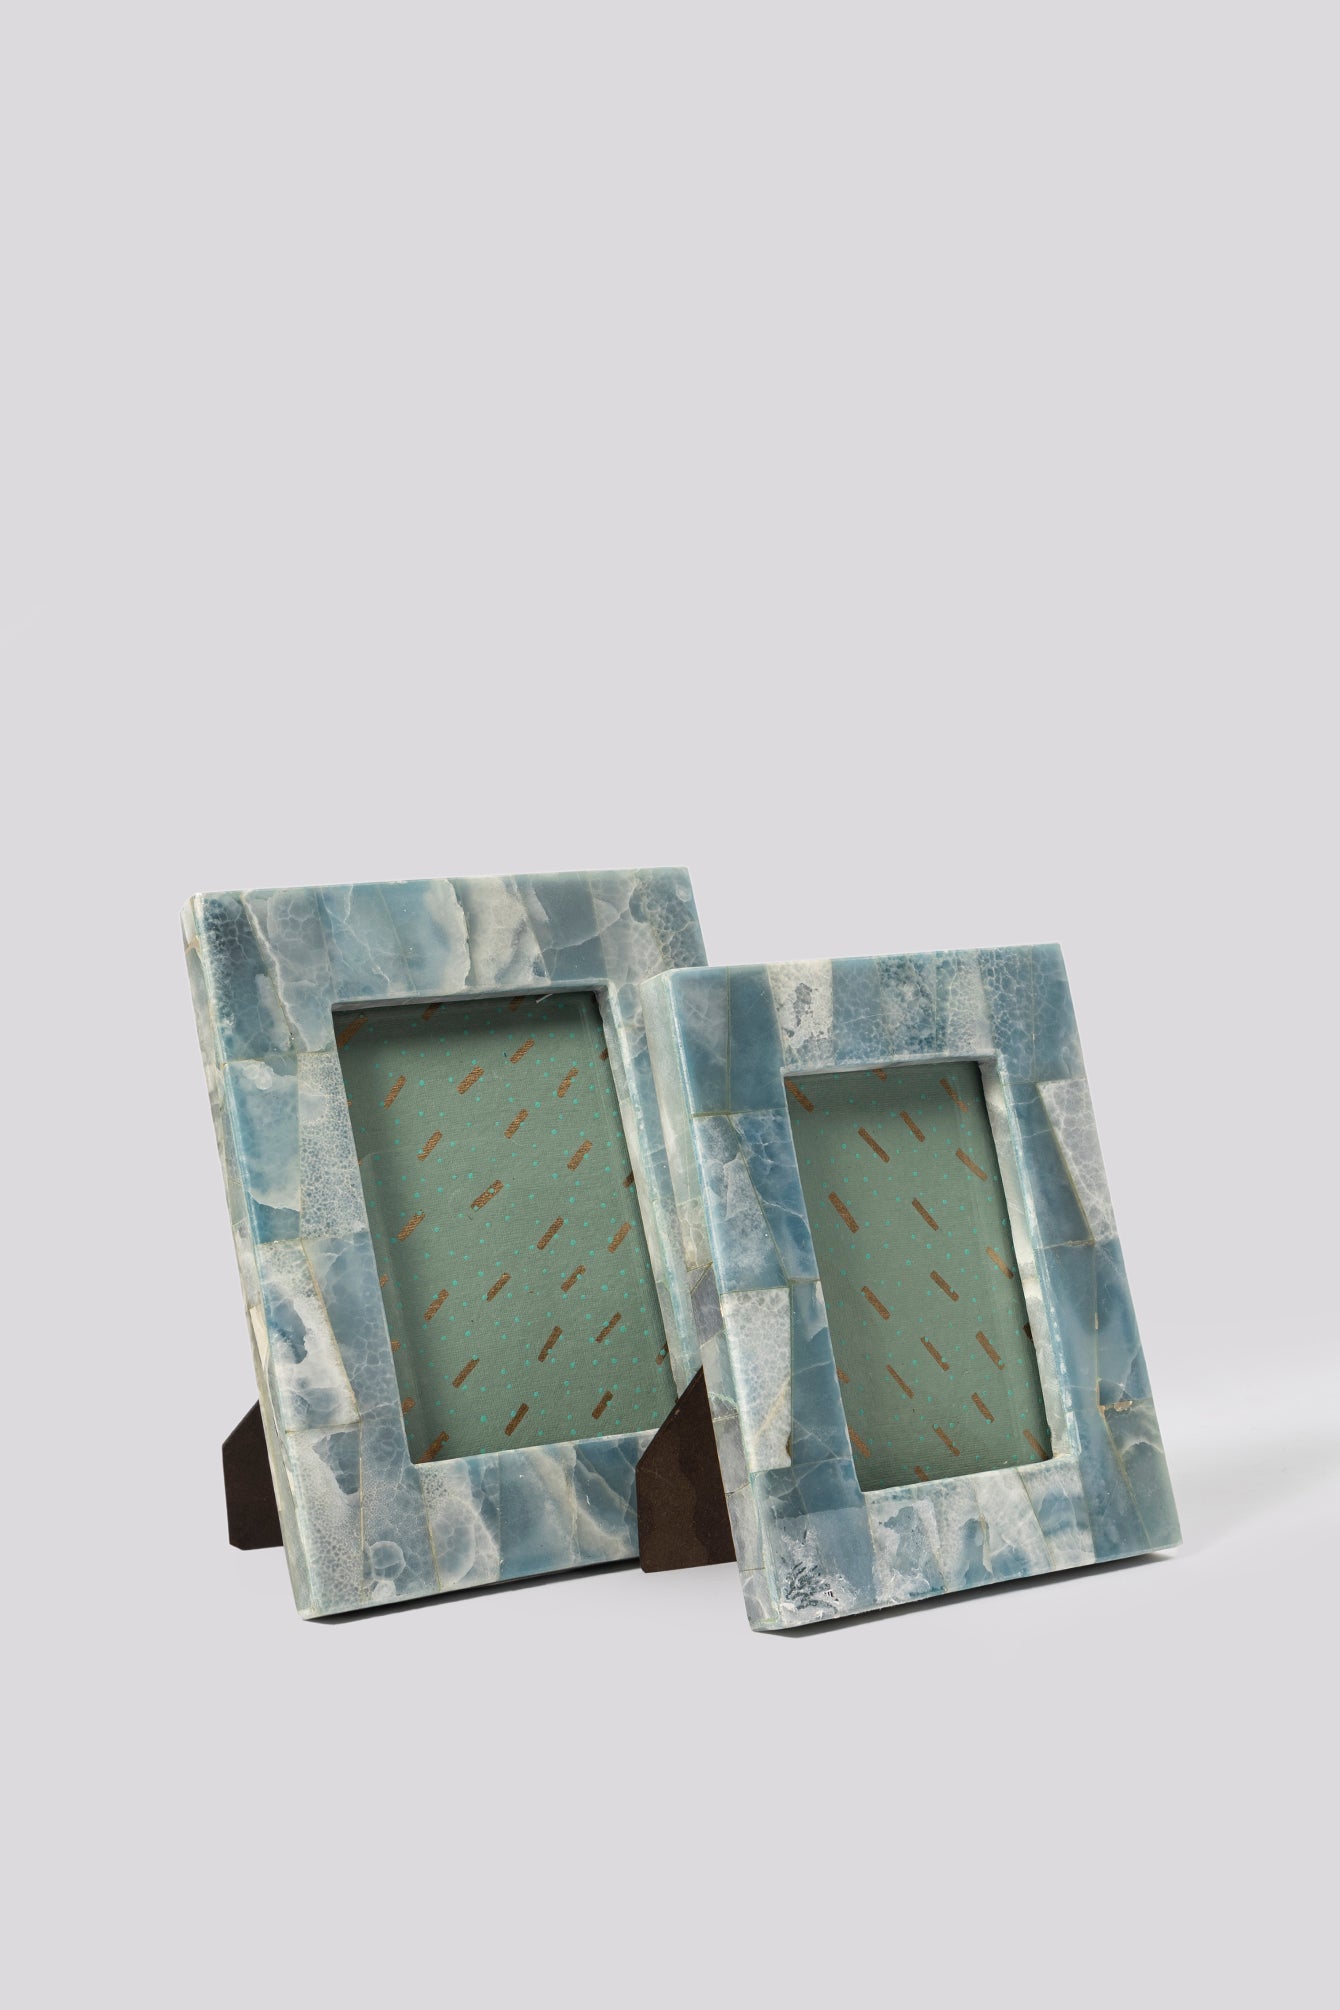 Sanok Stone Overlay Photo Frame With Glass (Set of Two)